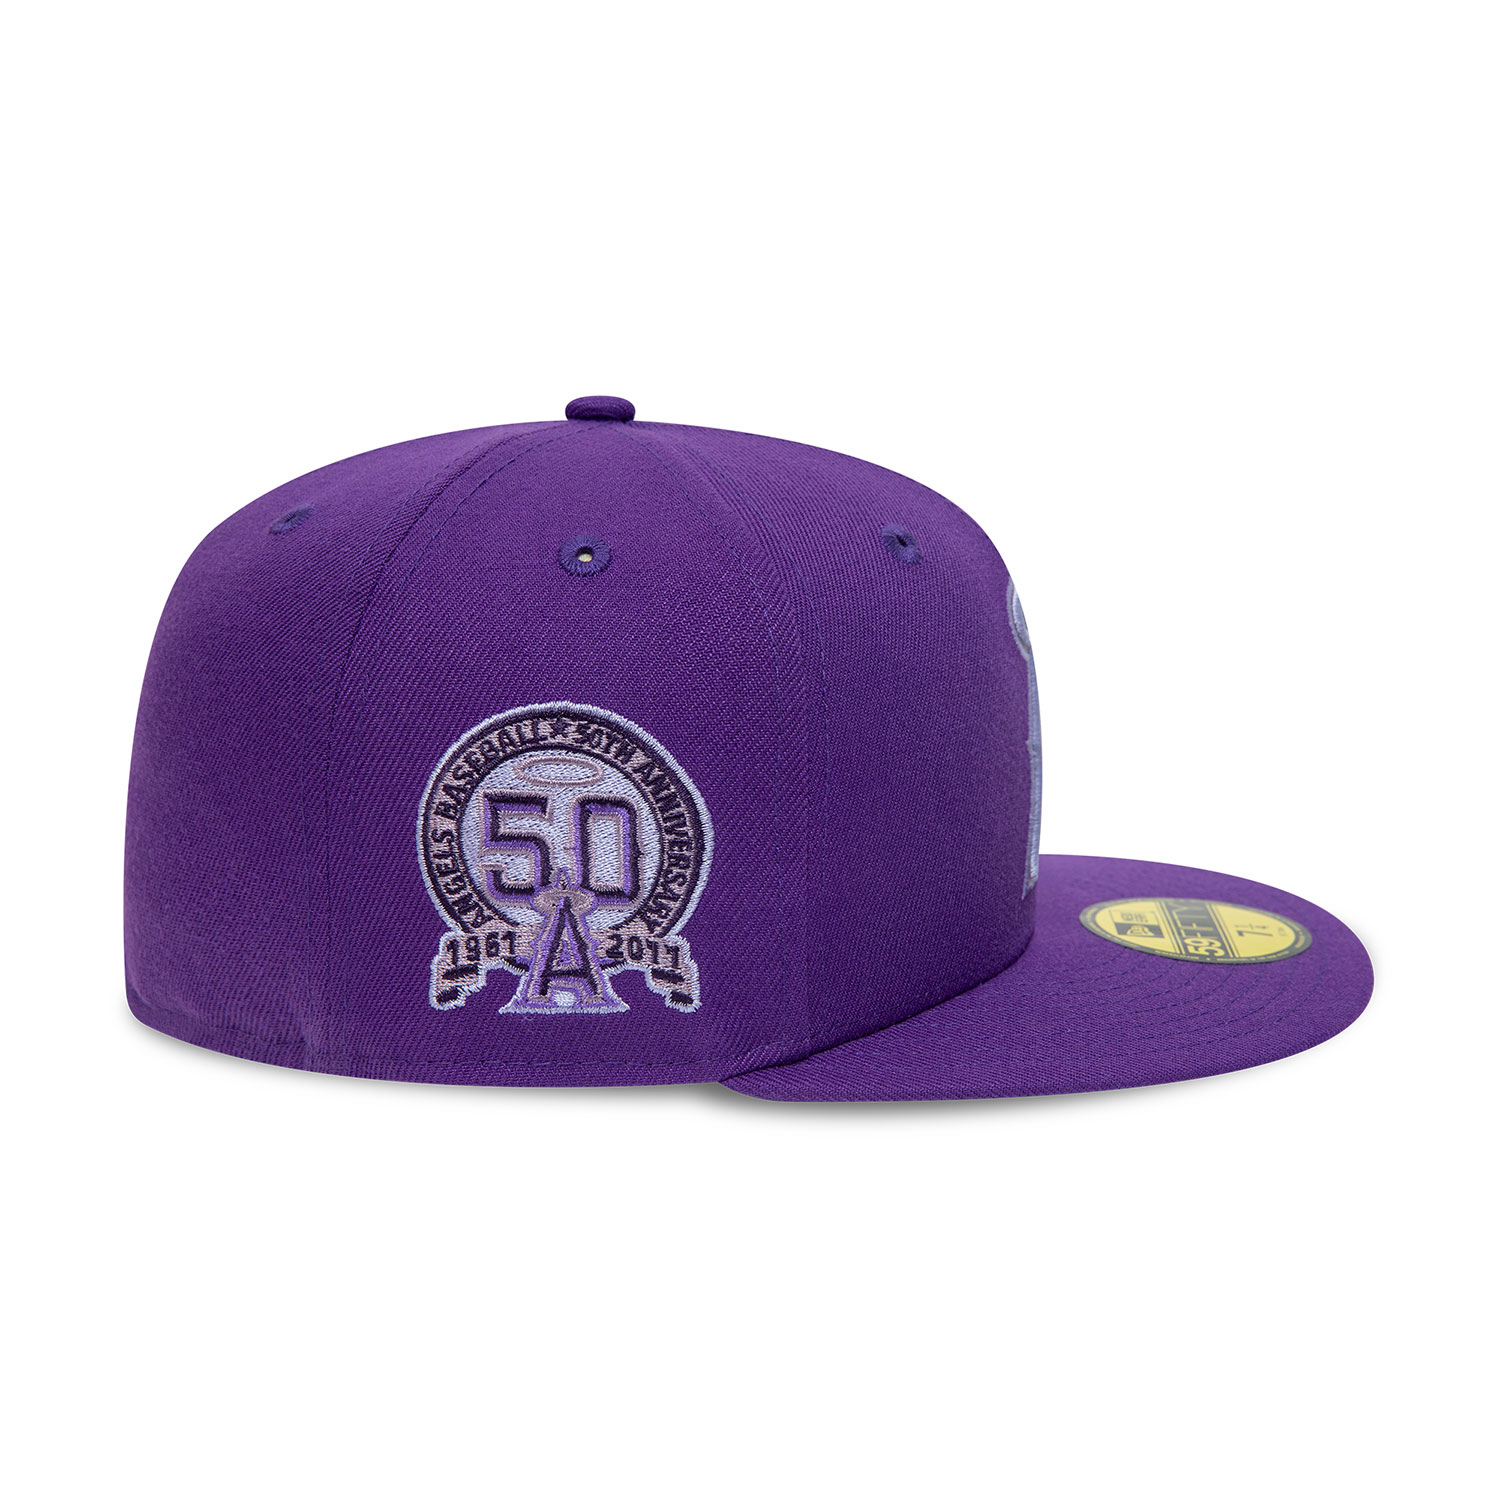 Official New Era LA Angels MLB Deep Purple 59FIFTY Fitted Cap B8223_249 ...